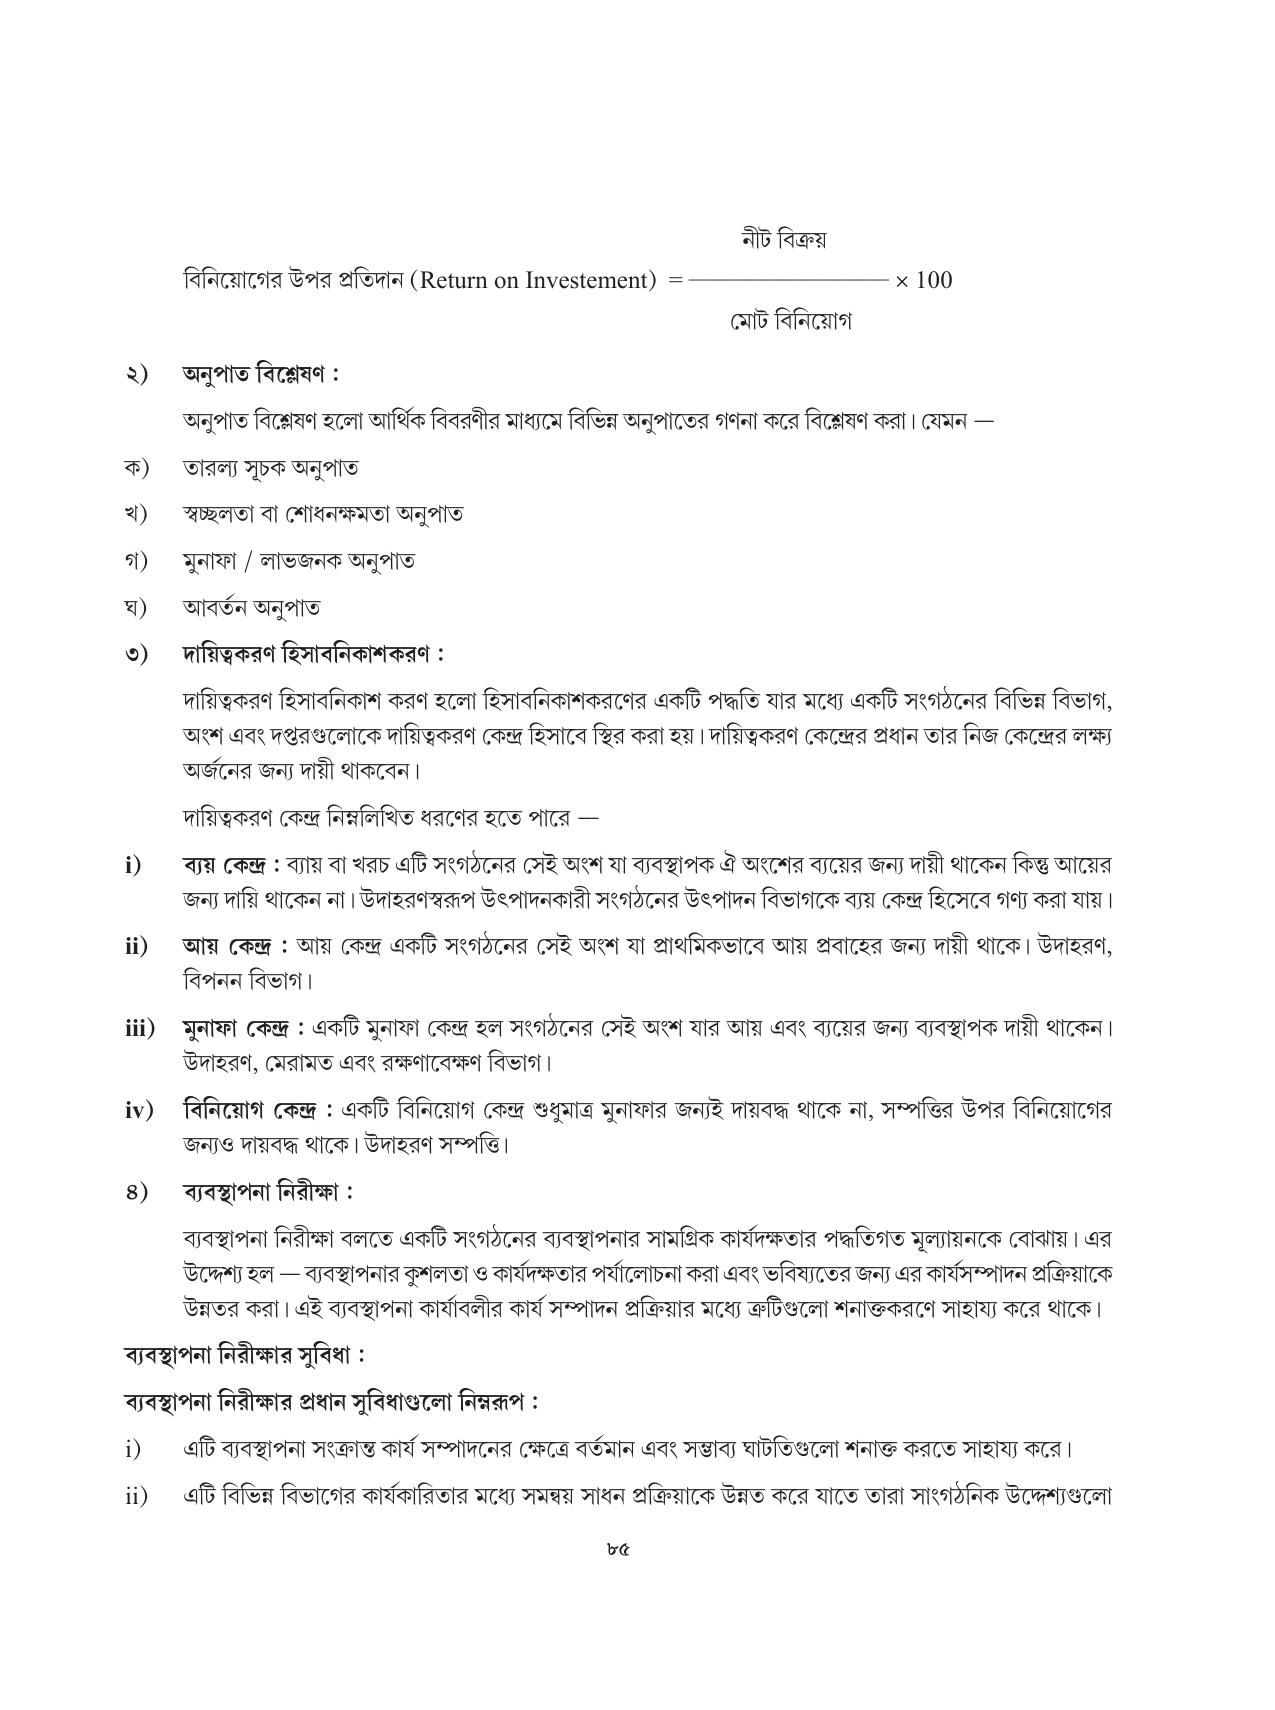 Tripura Board Class 12 Karbari Shastra Bengali Version Workbooks - Page 85